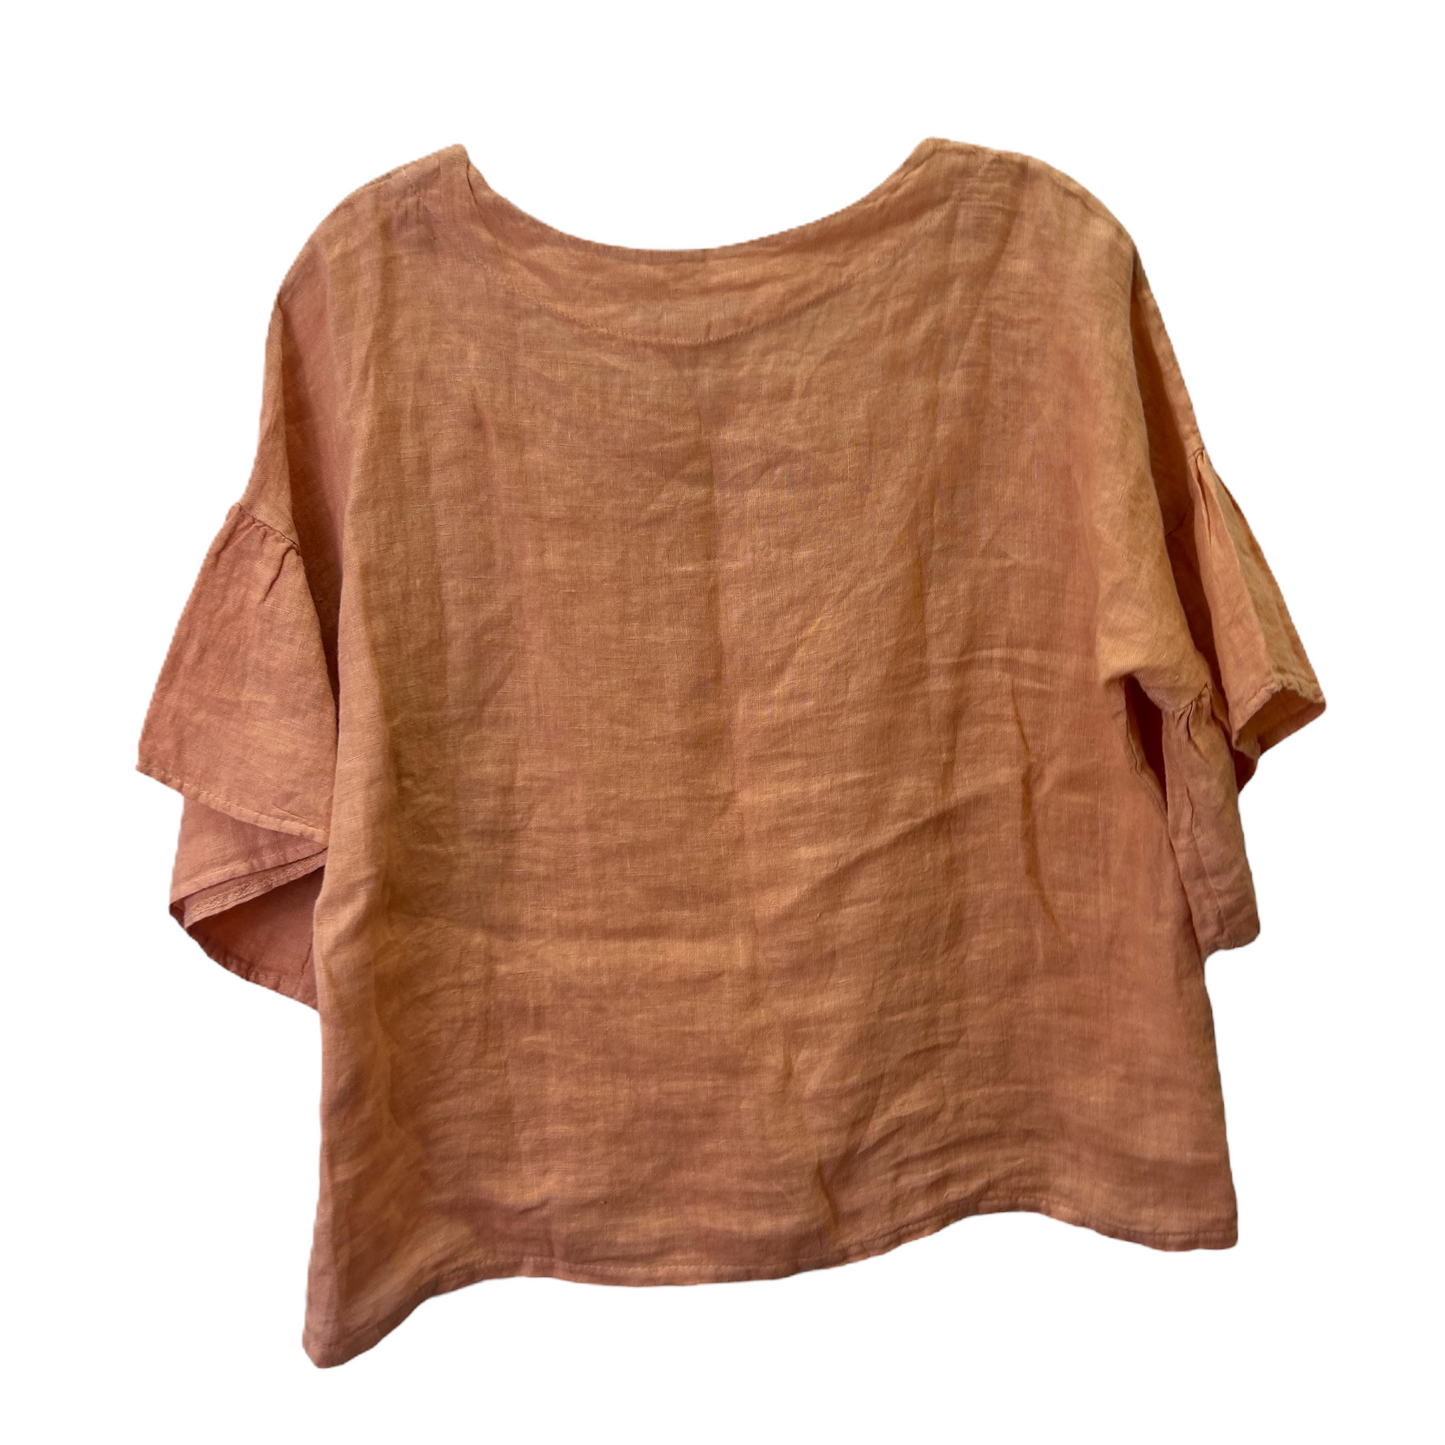 Orange Top Short Sleeve By viola borghi Size: S